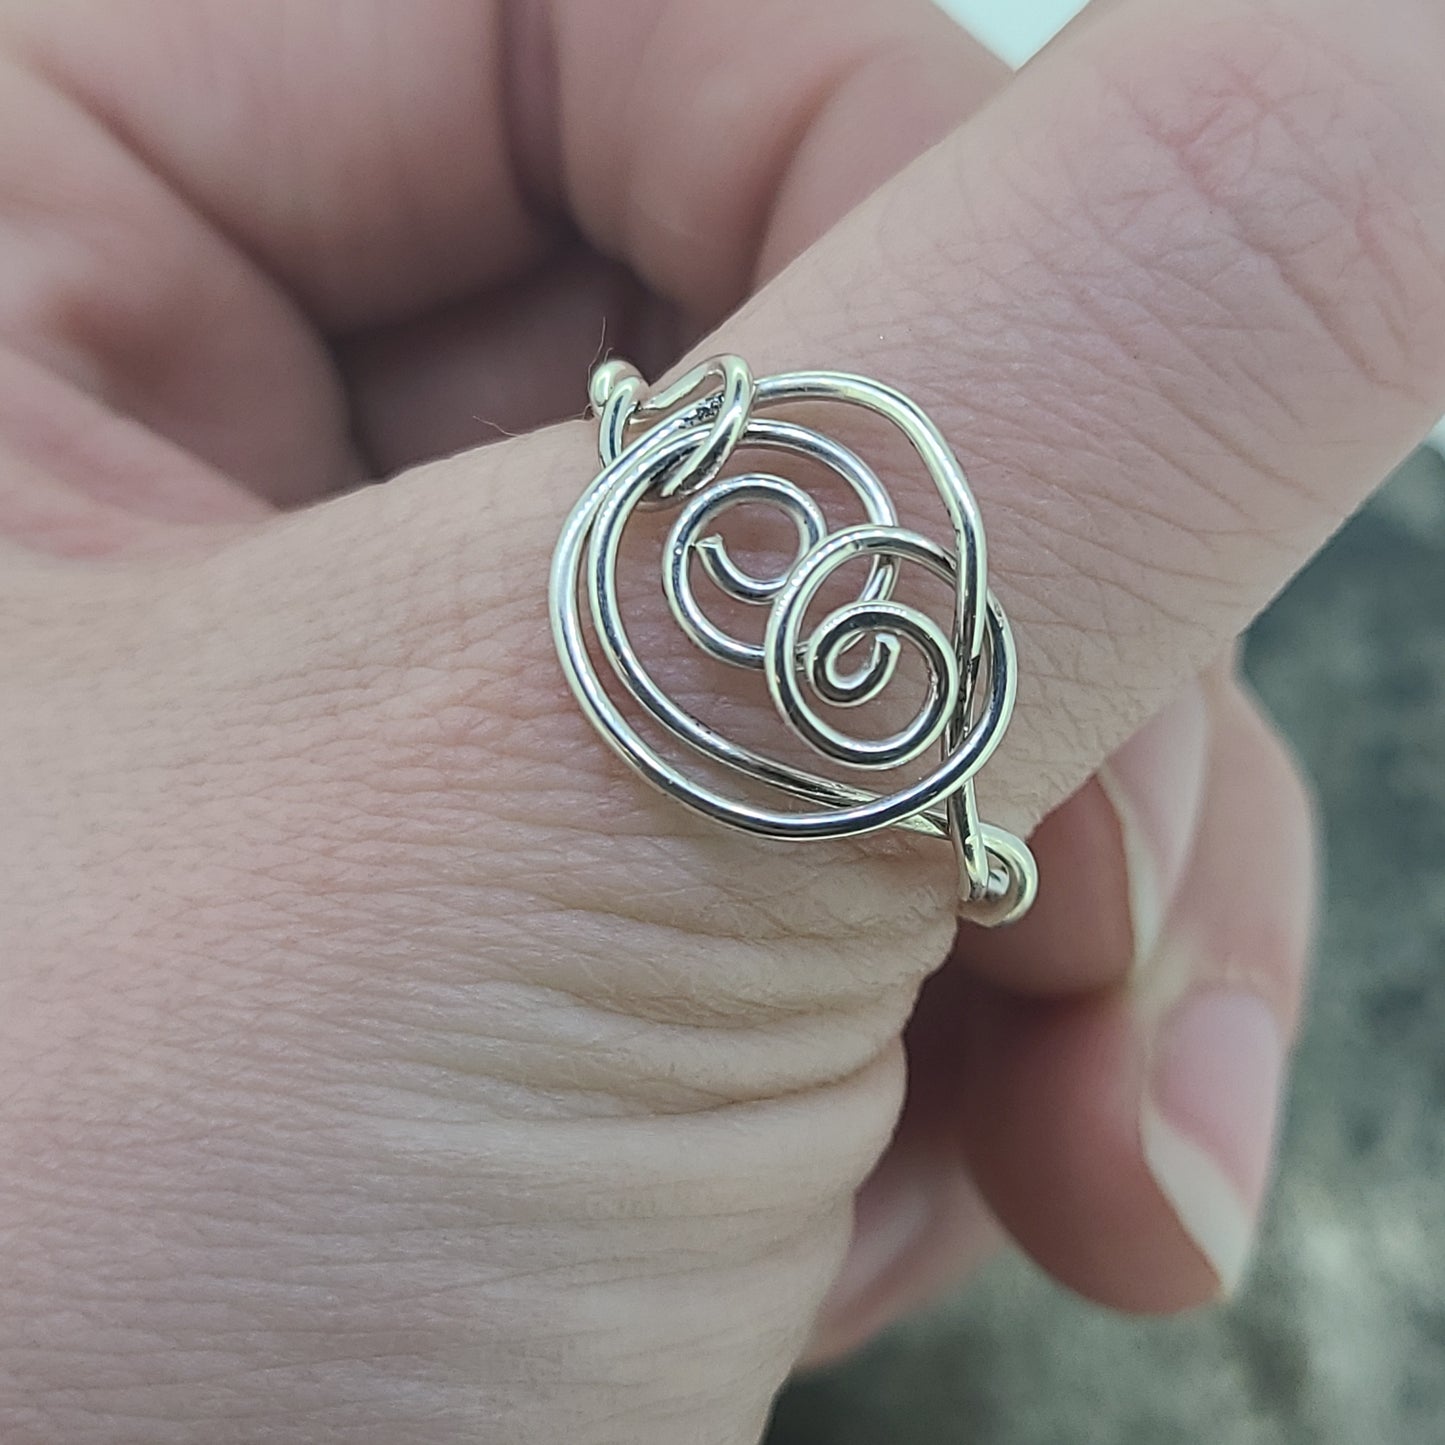 Handmade Spiral Design Ring